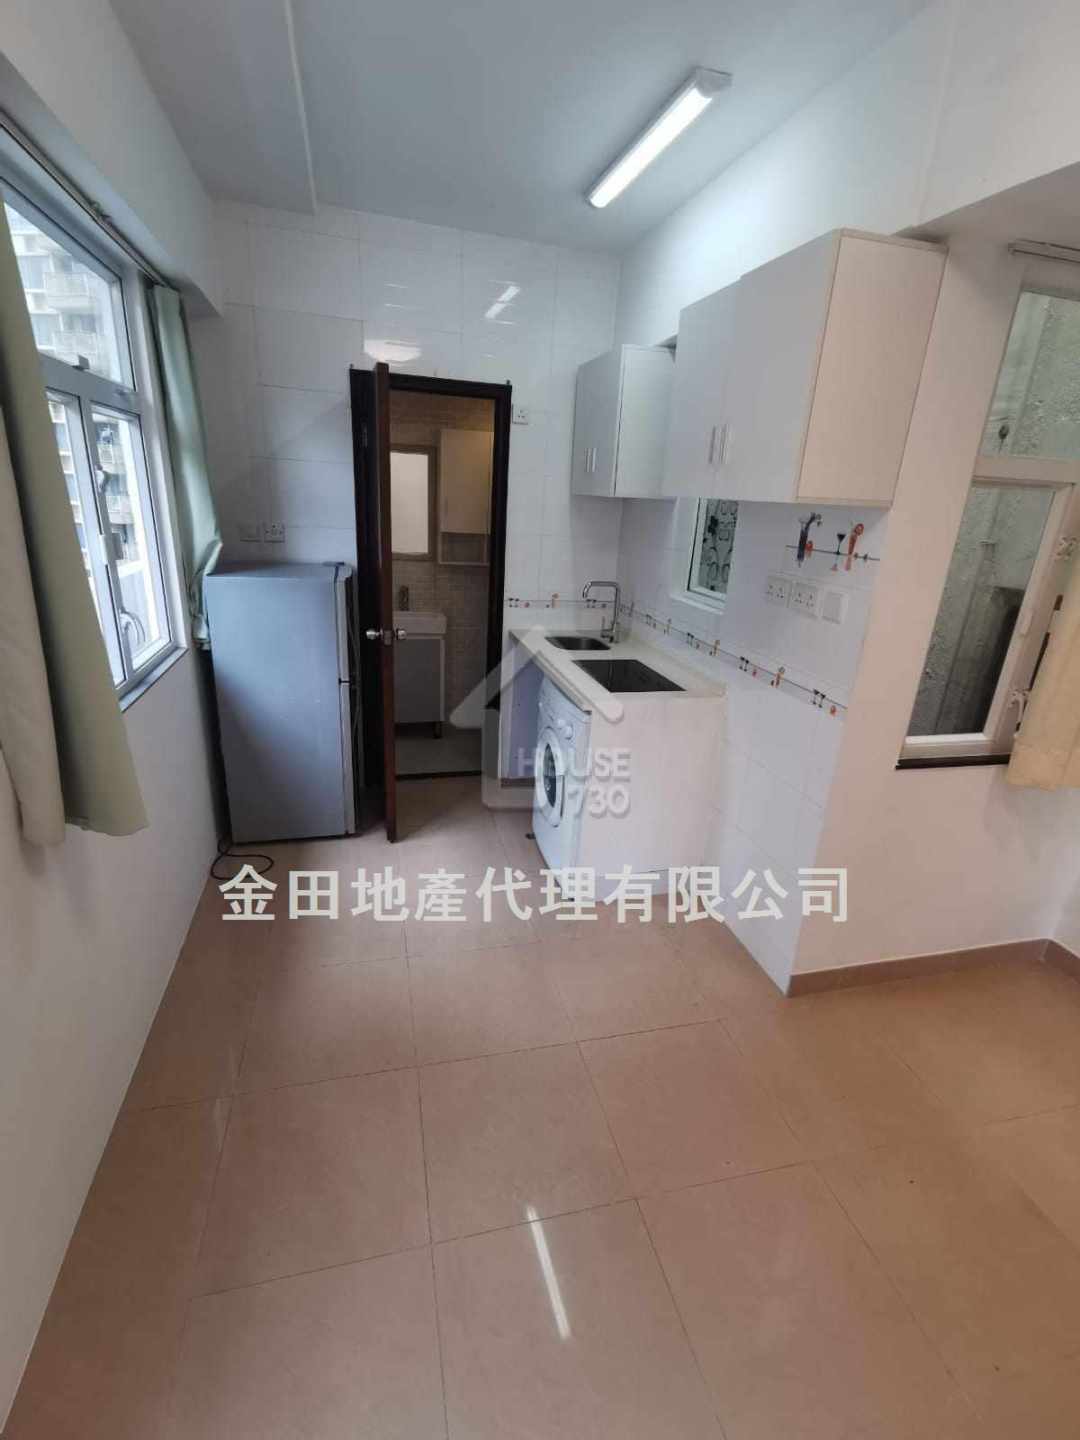 Wan Chai SUN TAO BUILDING Upper Floor Kitchen House730-6282653